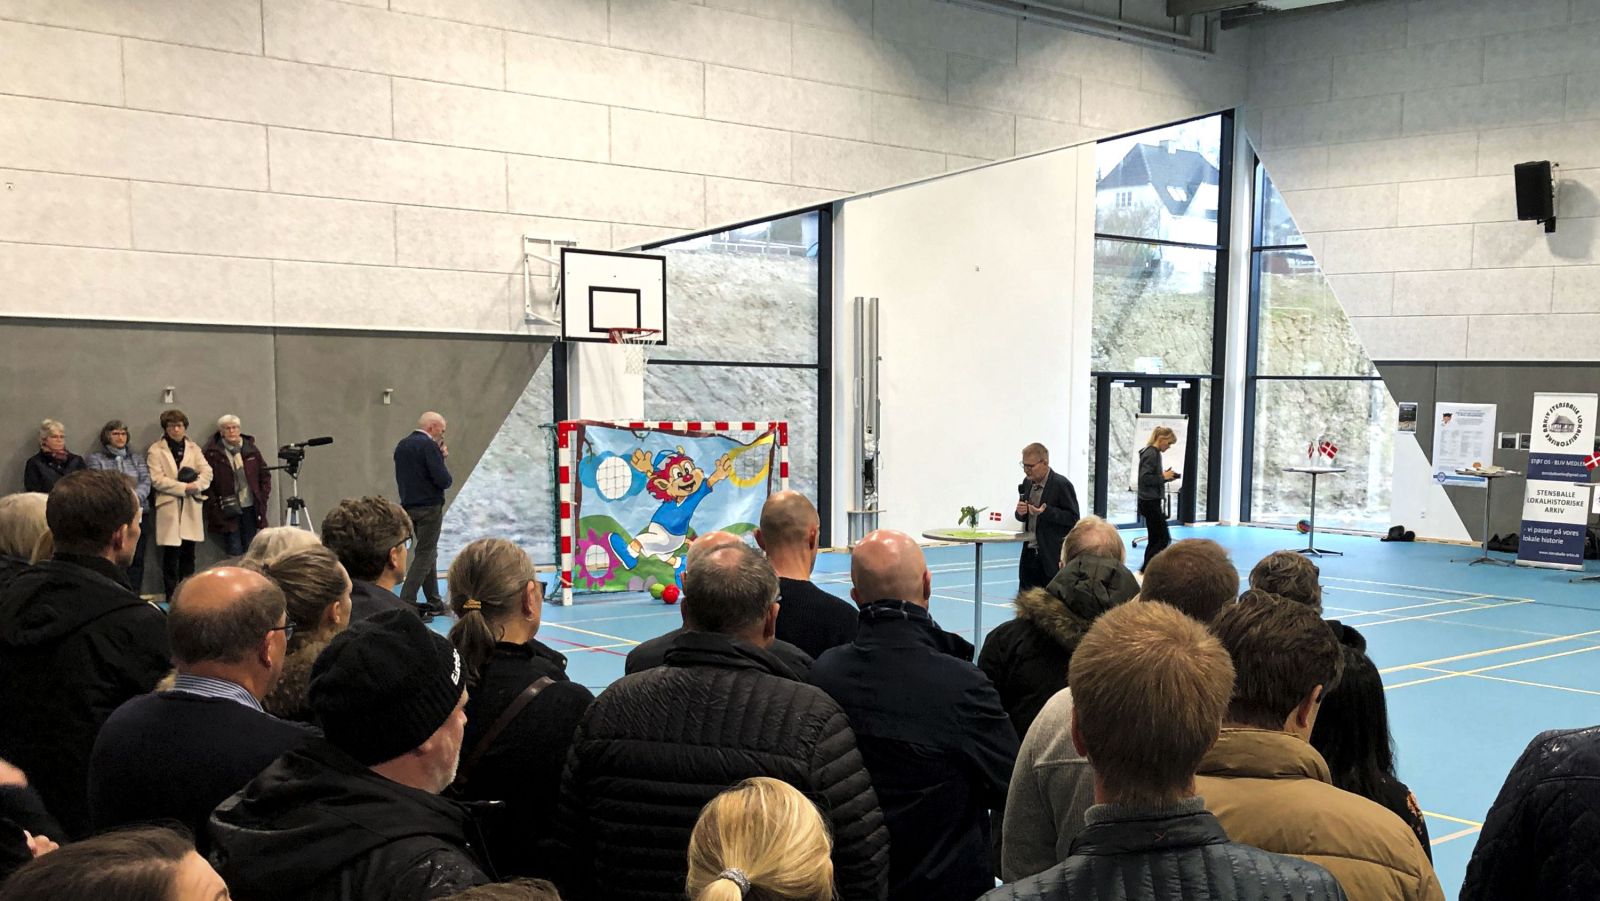 INDVIELSE: Ny hal i Egebjerg samt ny multihal i Stensballe